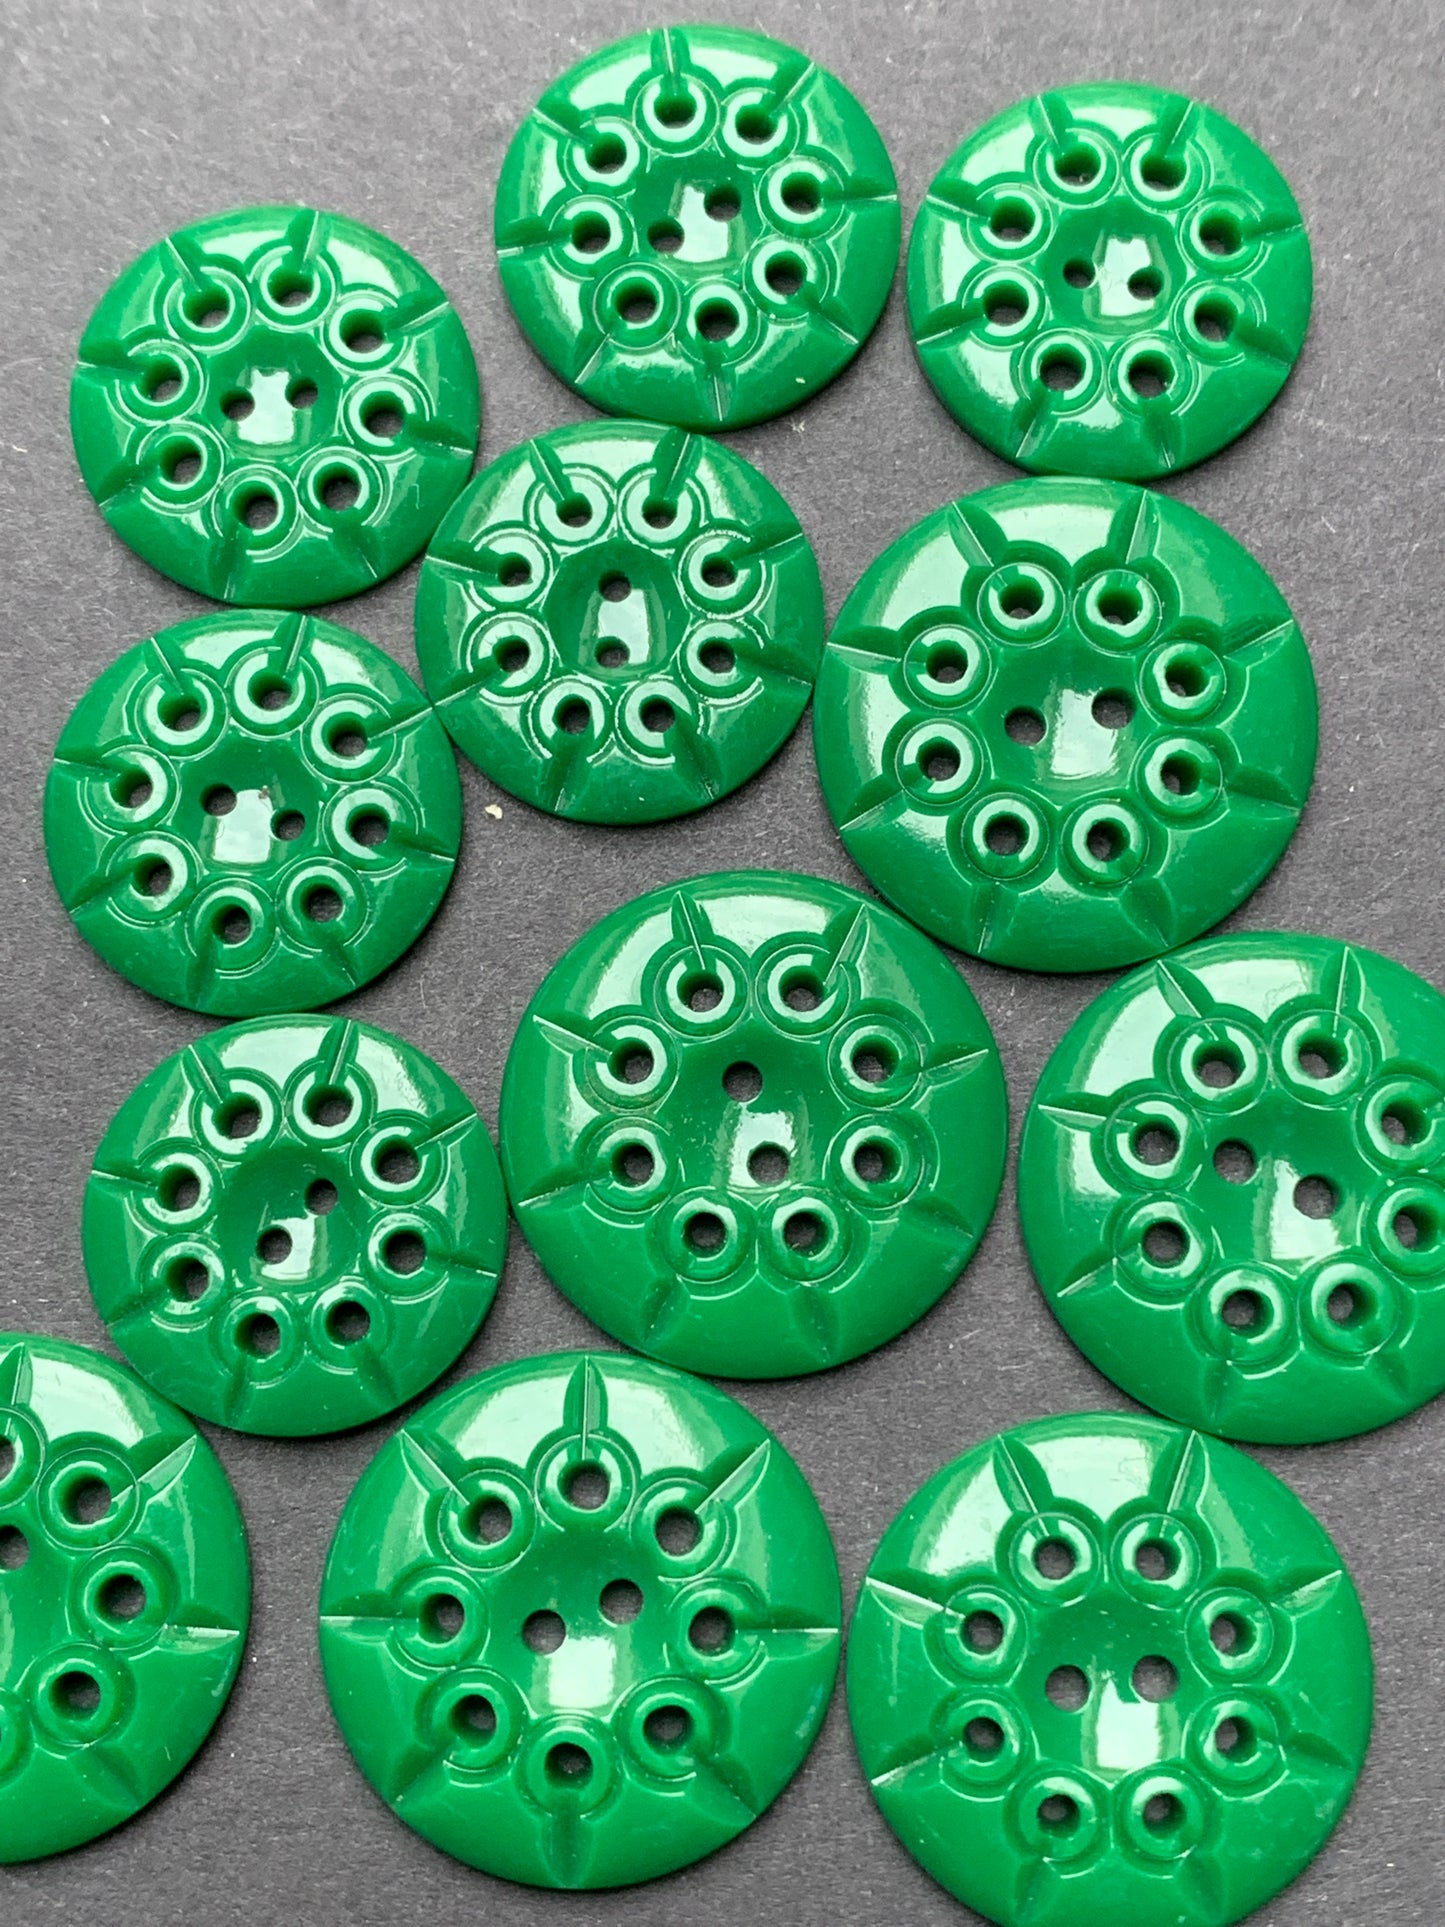 Shiny Dark Jade Green 2cm or 1.7cm Vintage Buttons